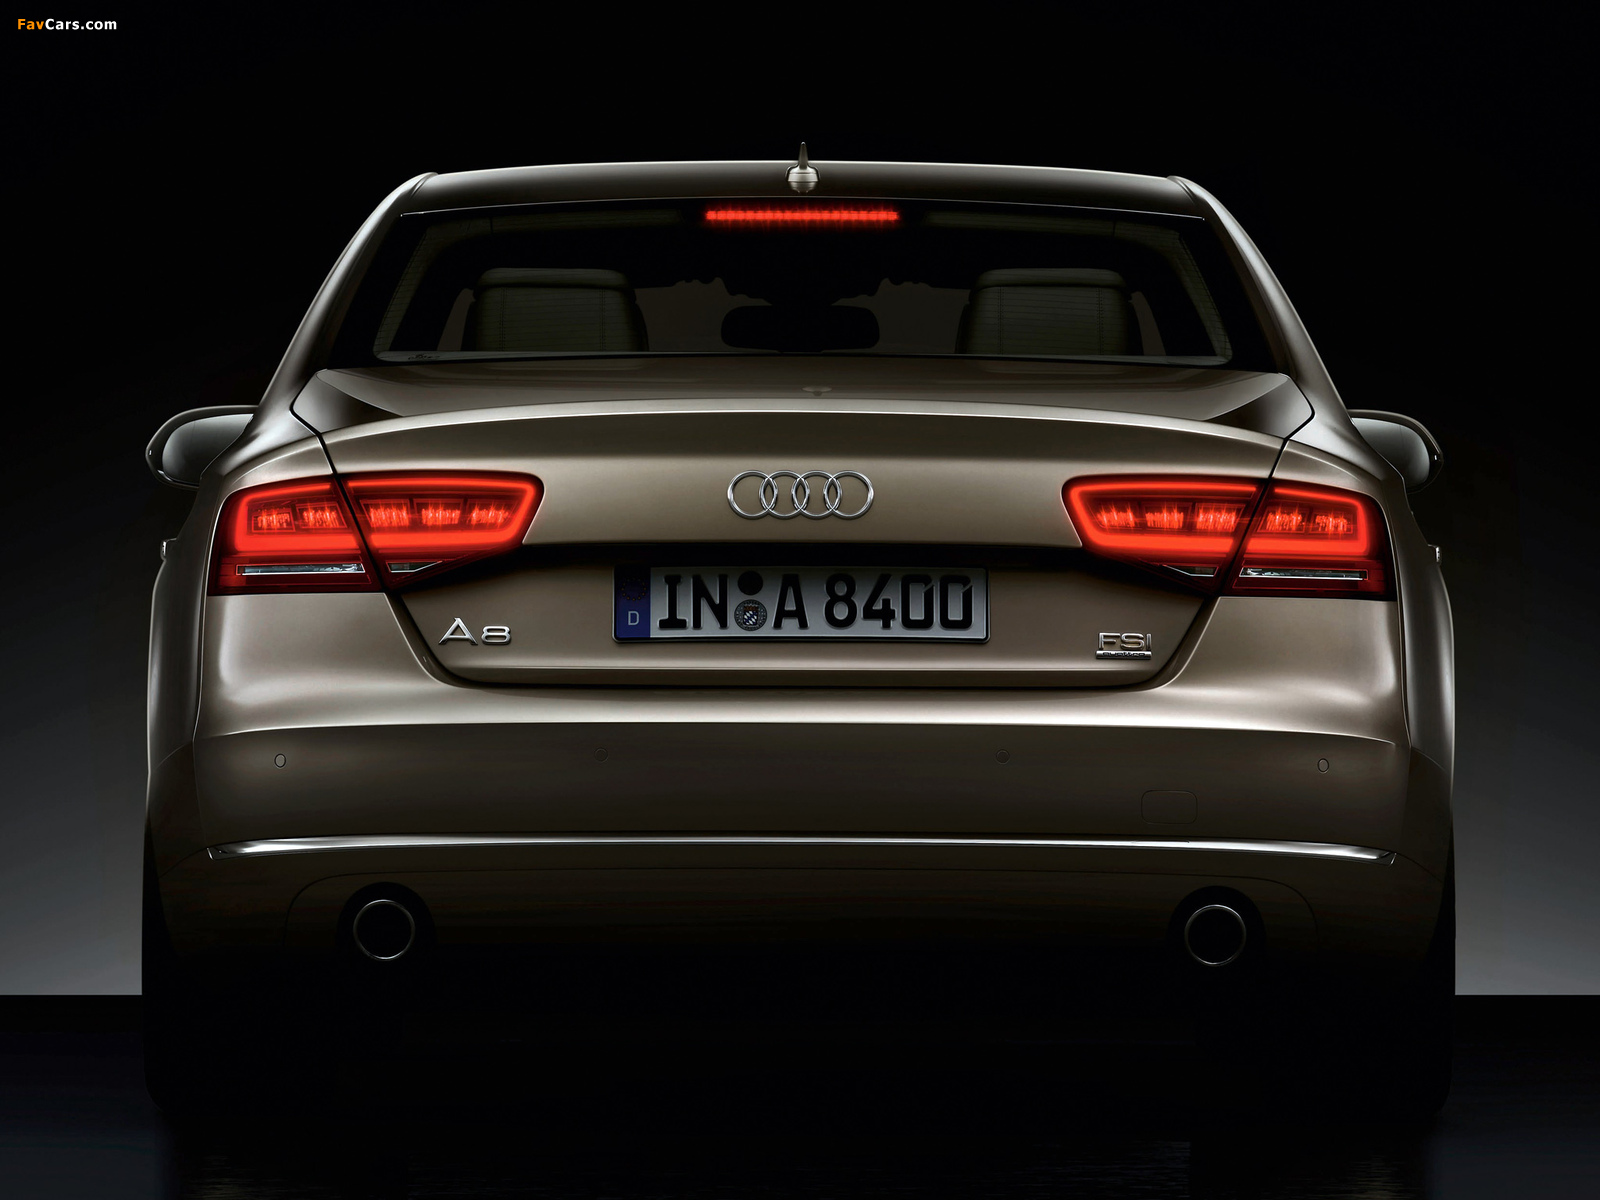 Audi A8 4.2 FSI quattro (D4) 2010 pictures (1600 x 1200)